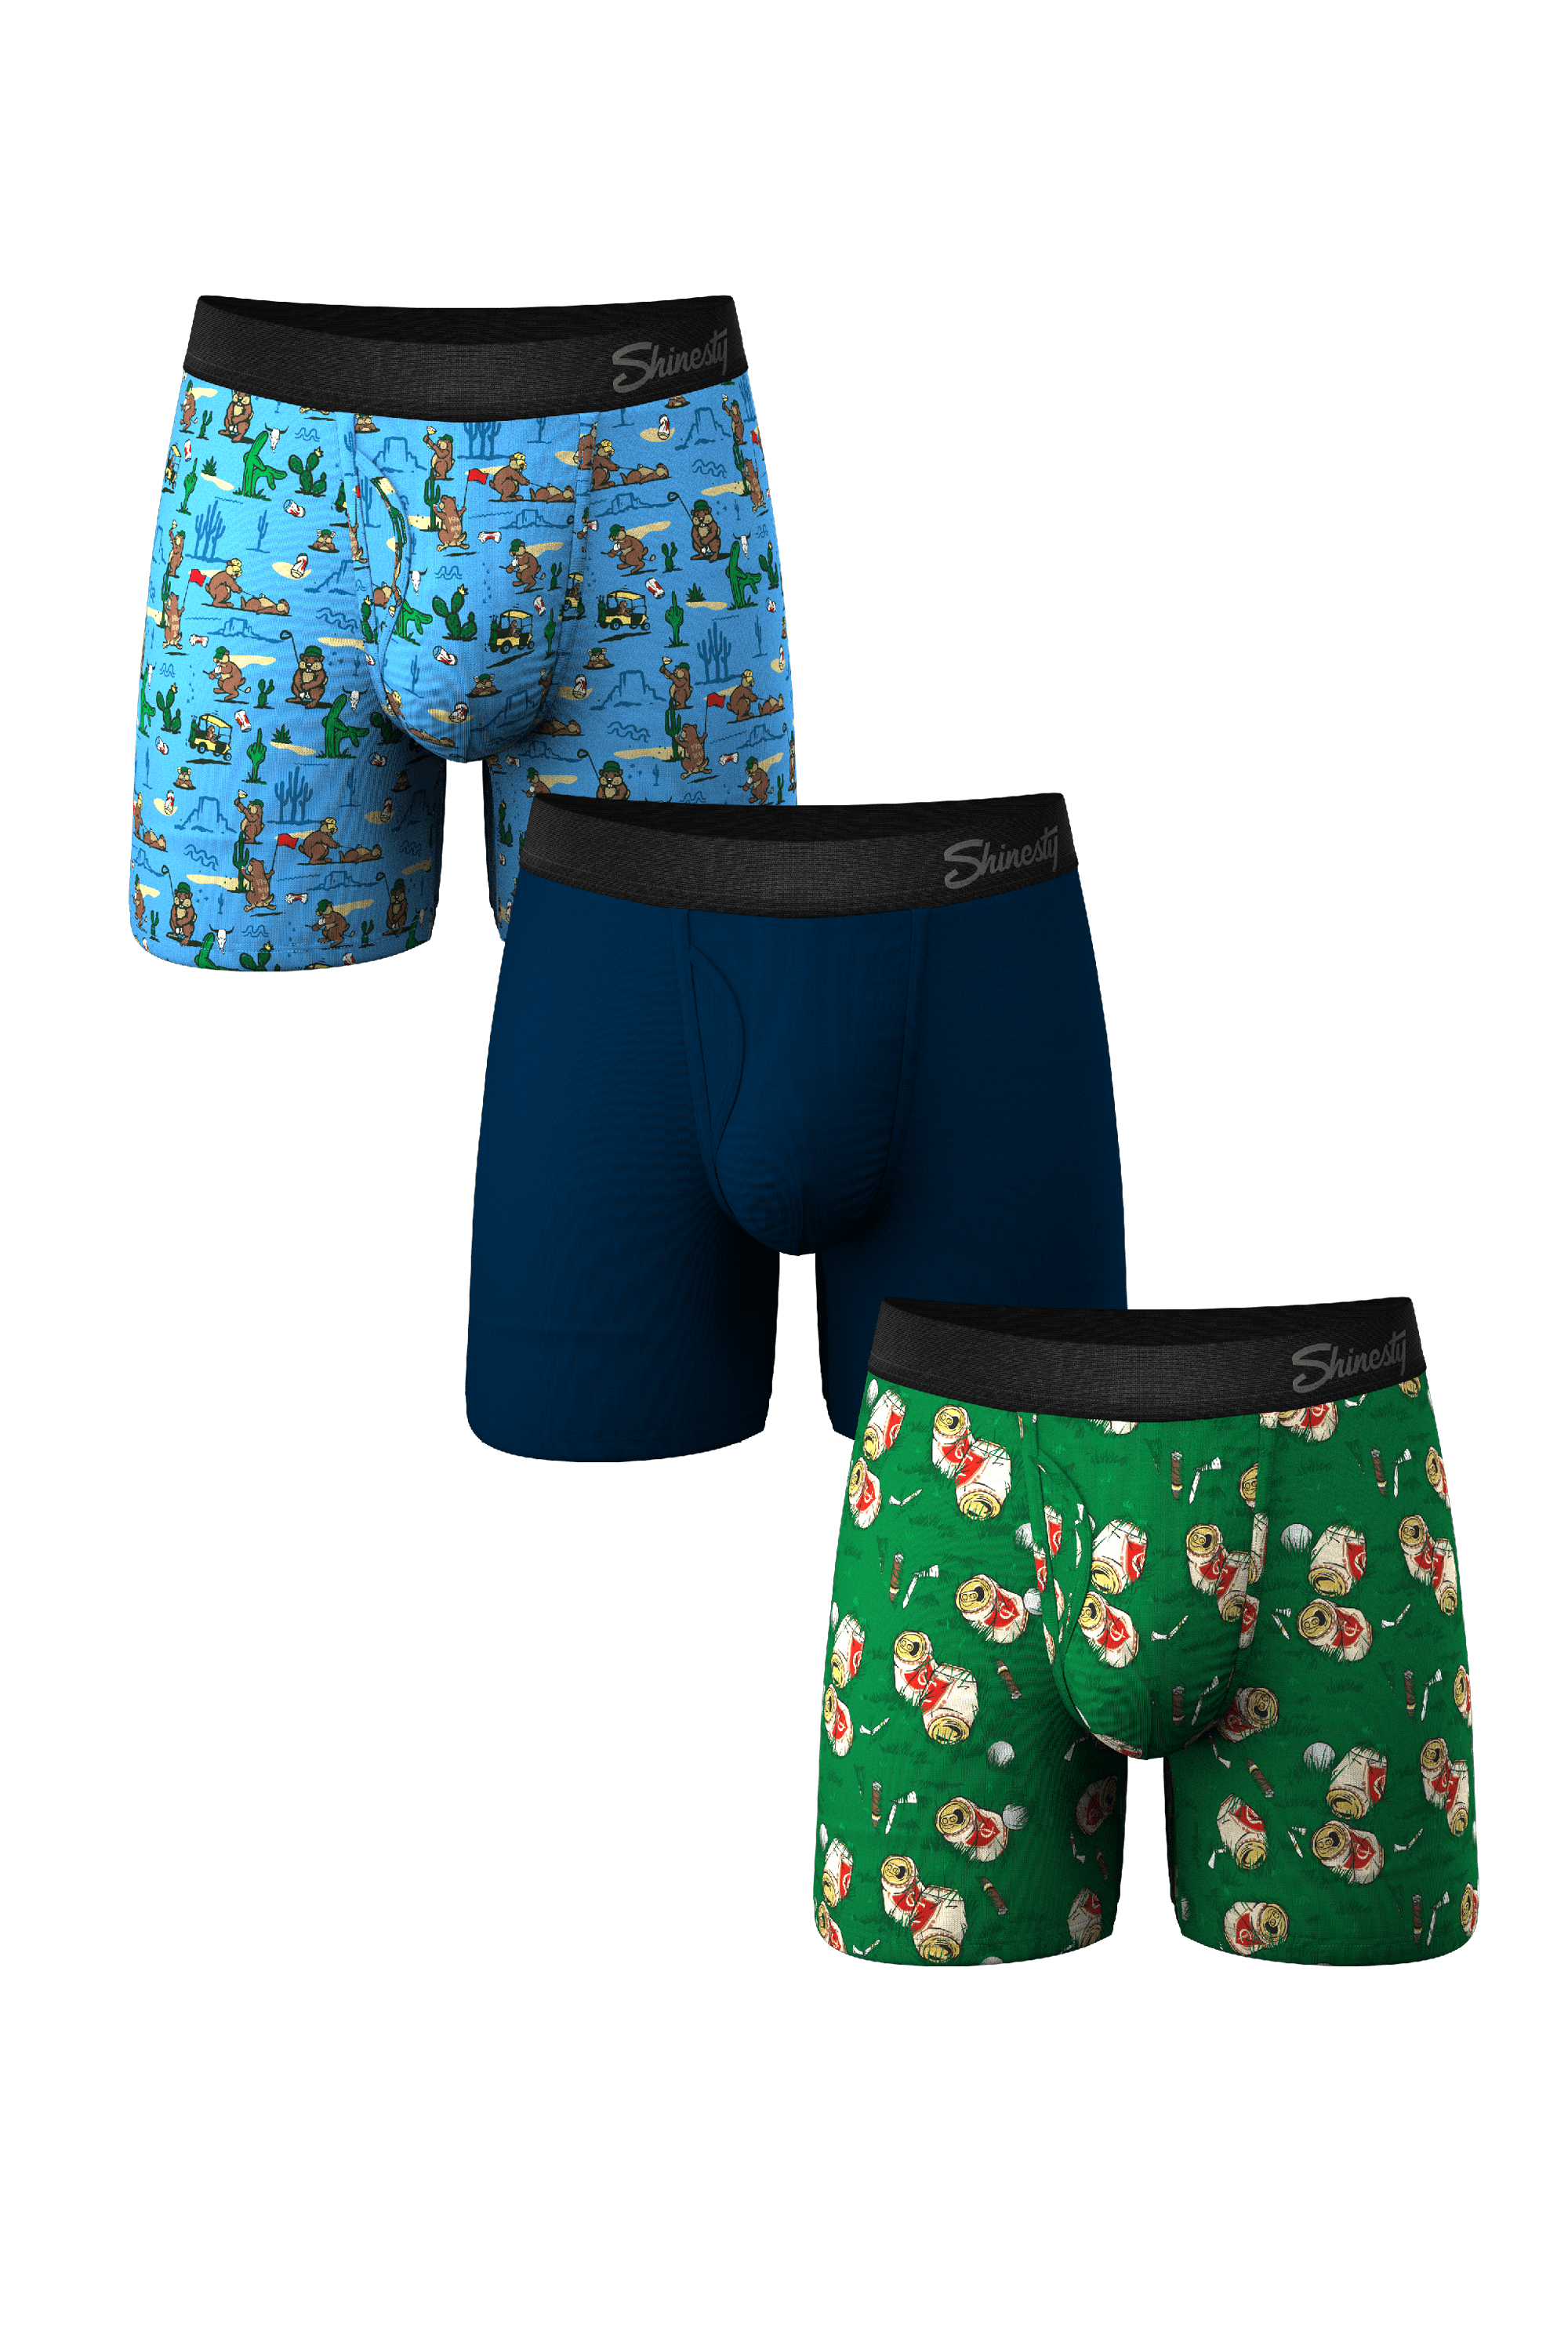 DC Comics Black Adam Logo Men's Underwear Boxer Briefs